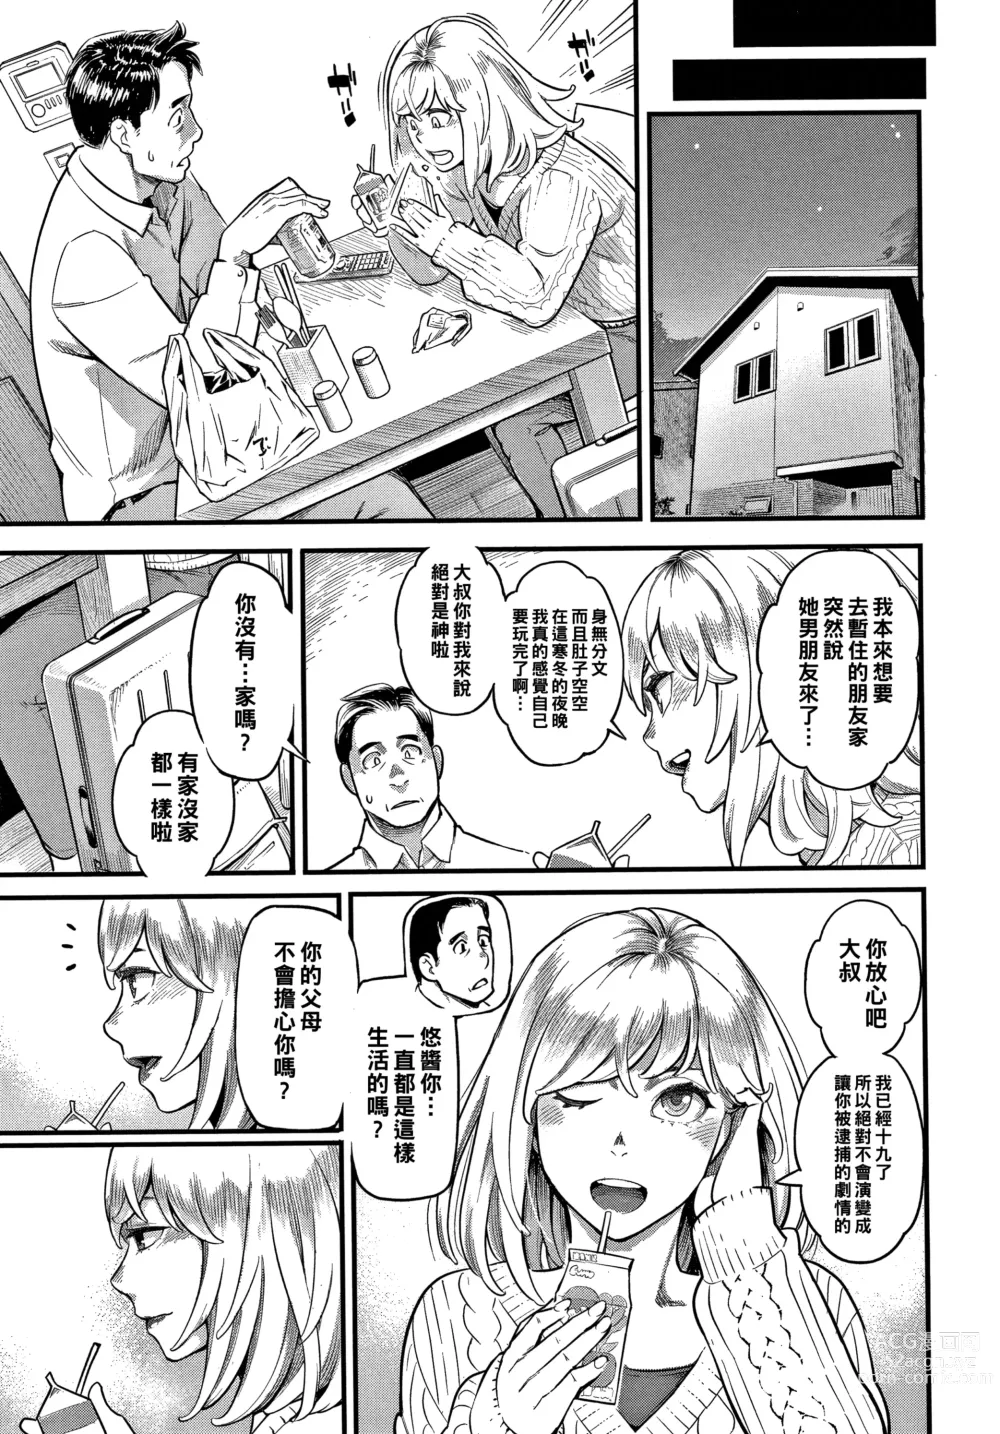 Page 5 of manga Shikujiri My Home